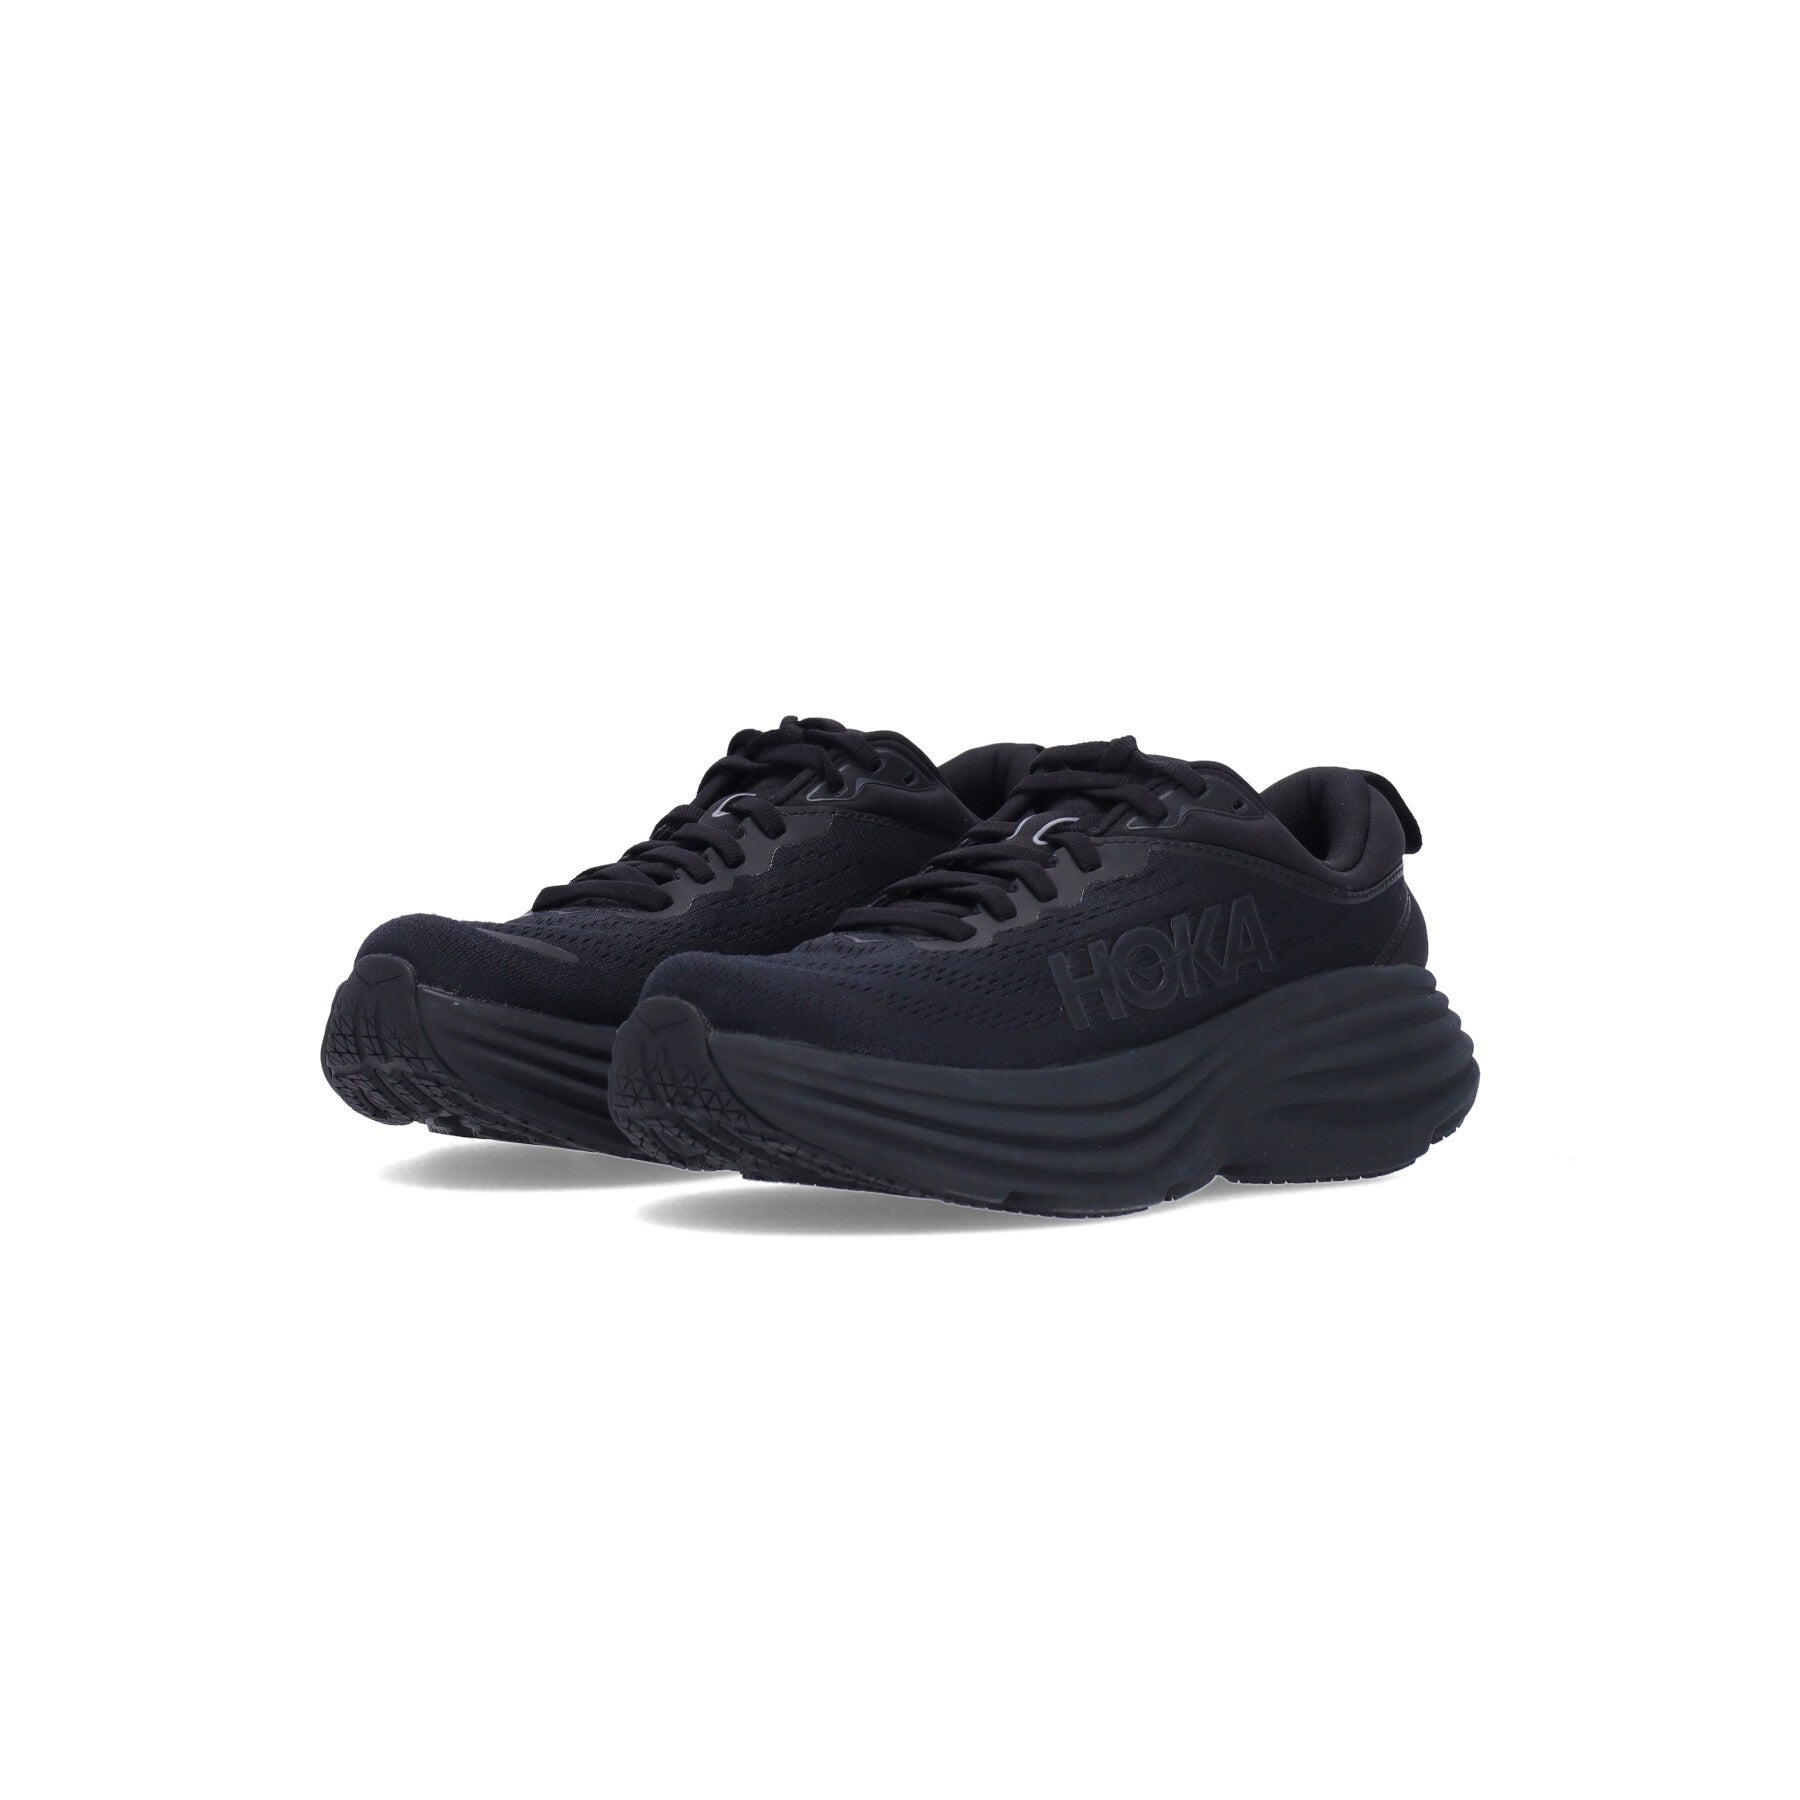 Outdoor Shoe Women Bondi 8 Black/black